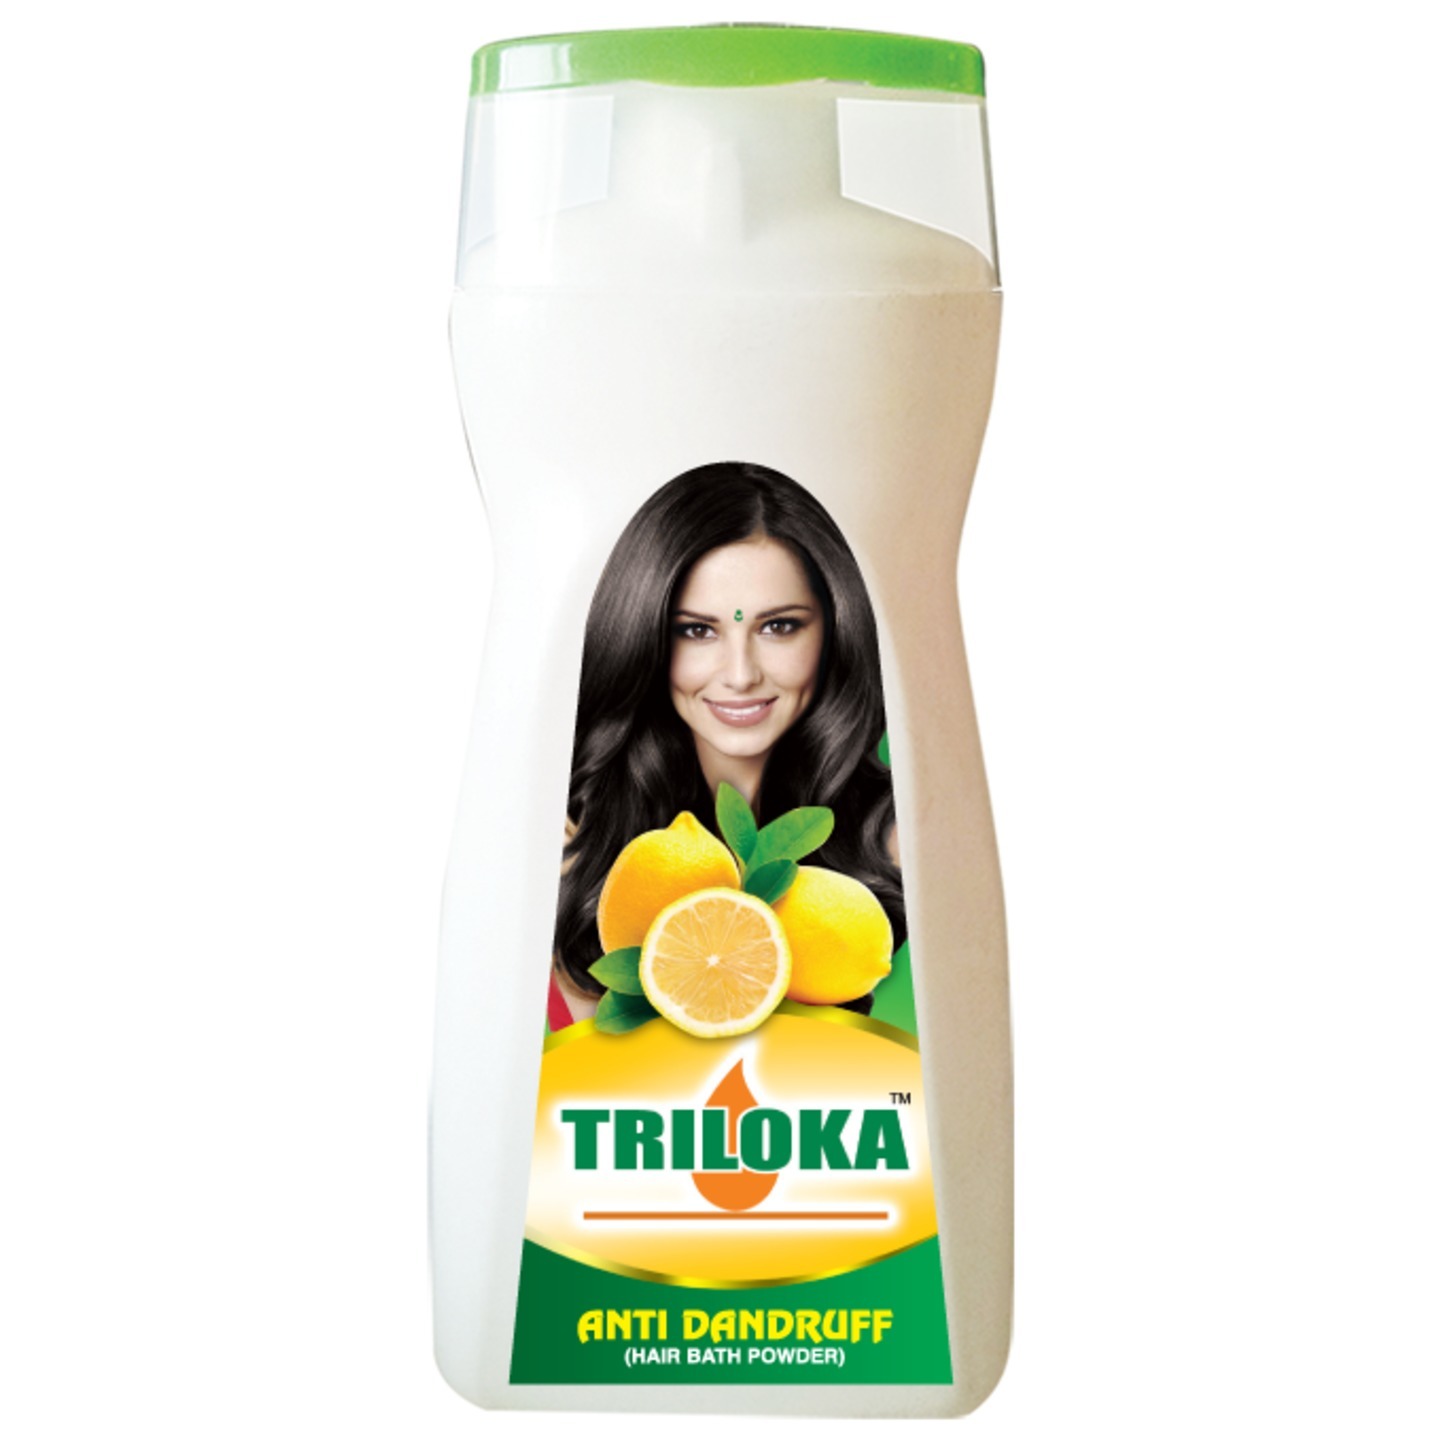 New Triloka Anti Dandruff Head Bathing Powder Bottle ( Shampoo Powder) - 1 Case